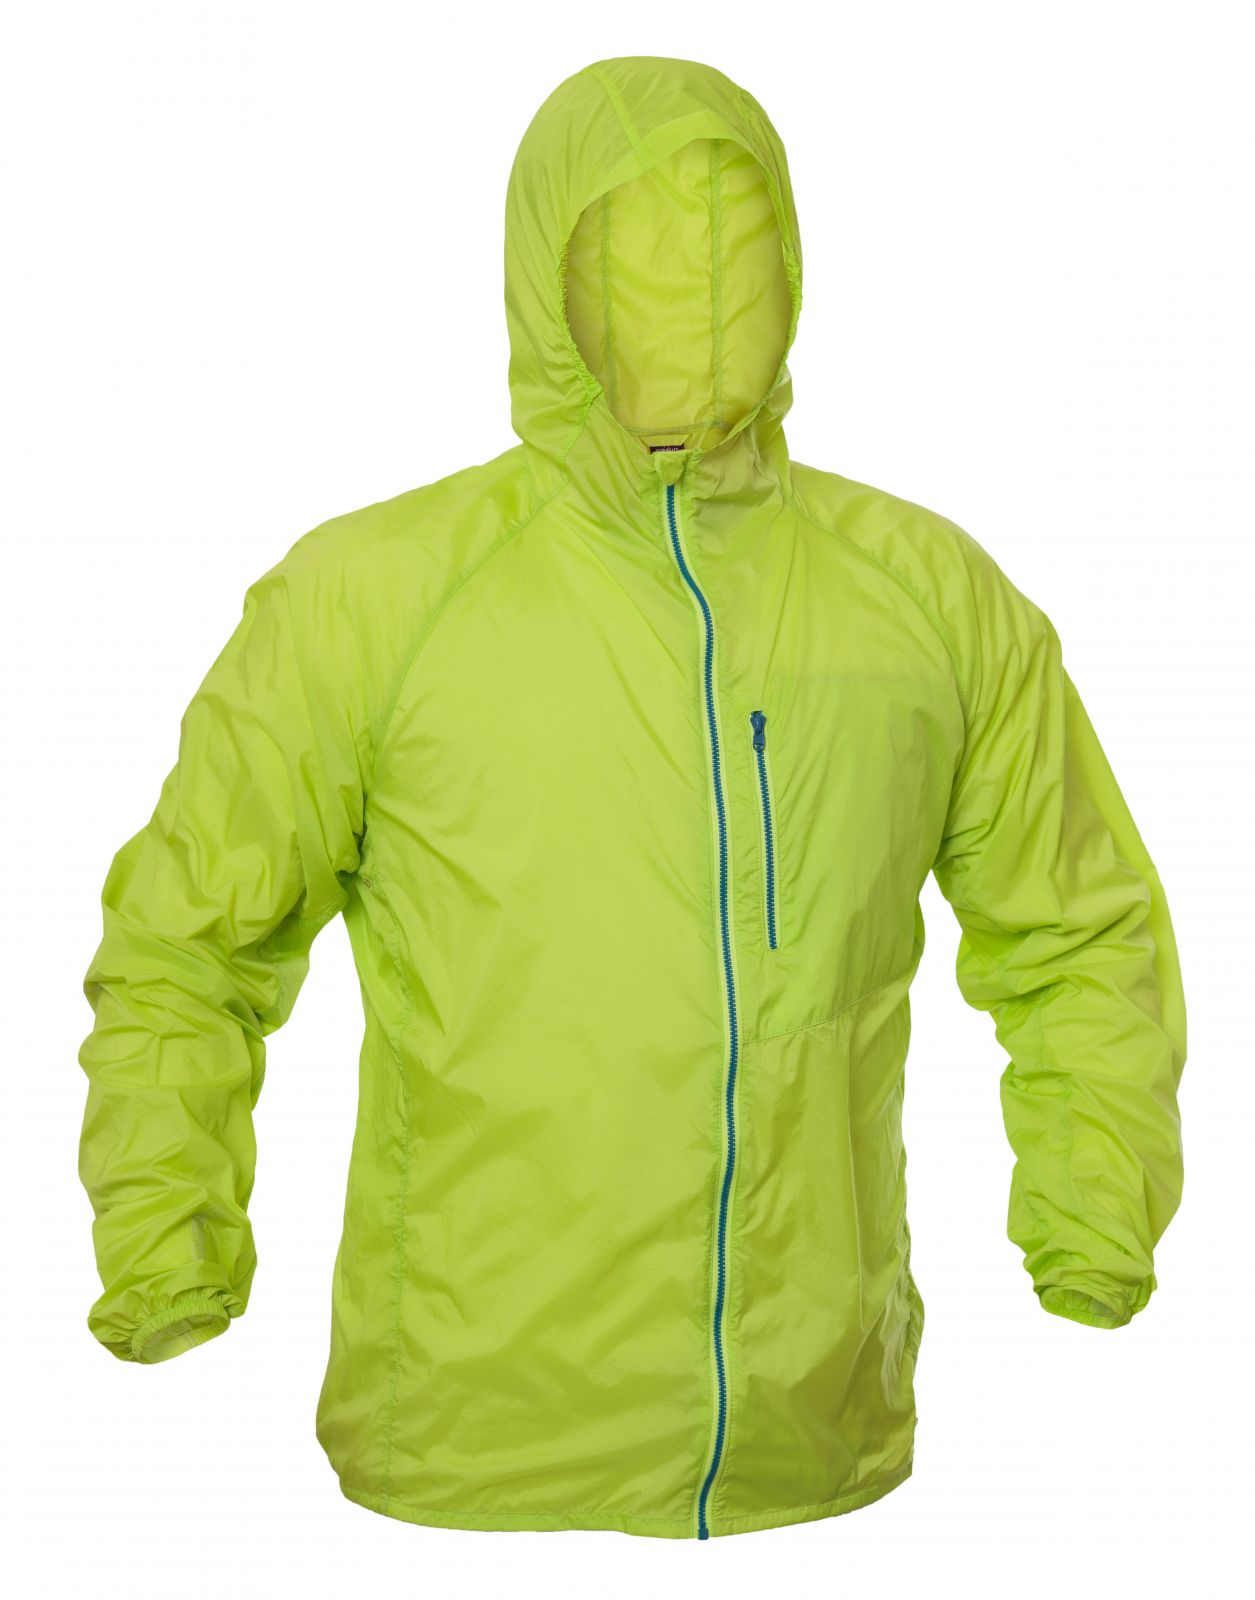 Outdoorix - Warmpeace Forte lime ultralight unisex jacket